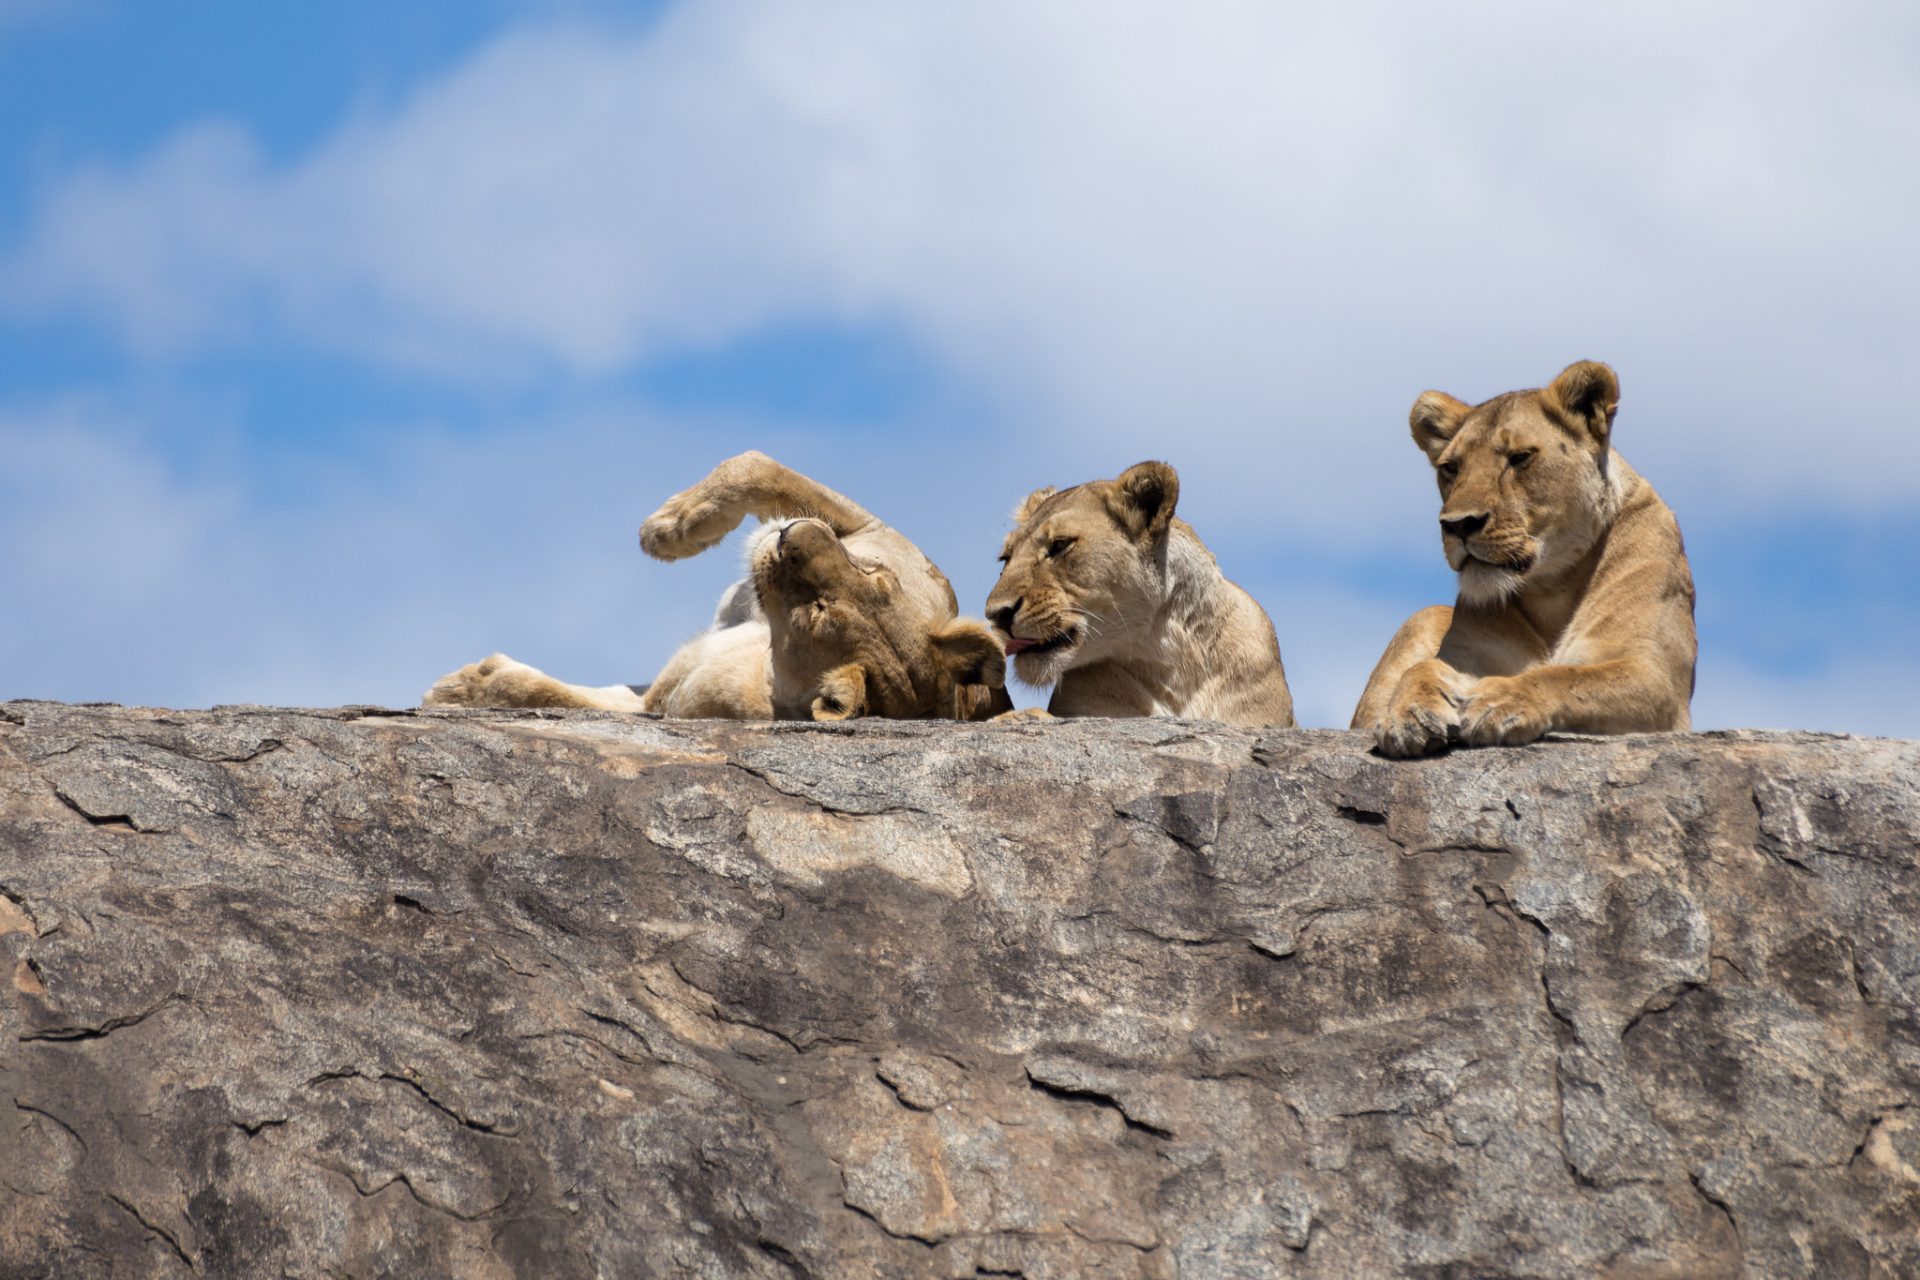 The Big Cats of the Serengeti